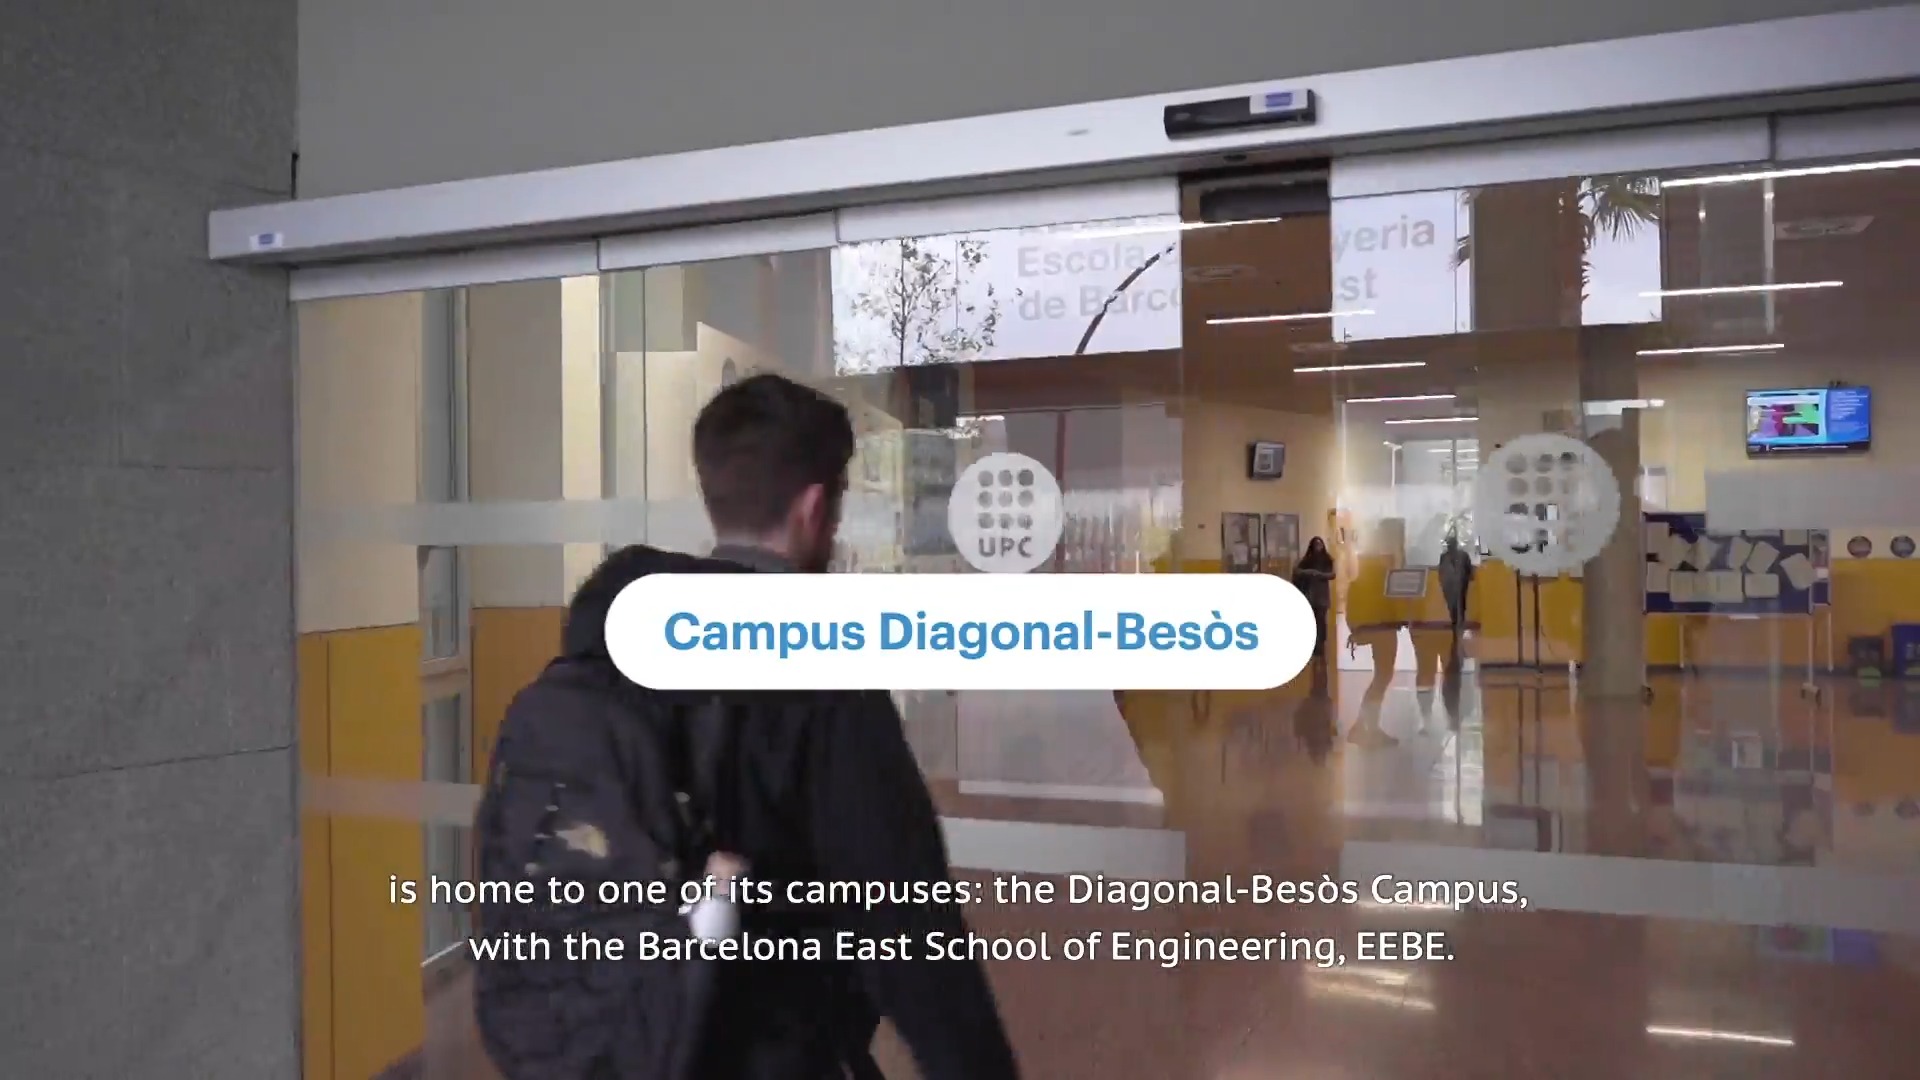 Presentation of Barcelona East School of Engineering (EEBE) at UPC (version with subtitles)